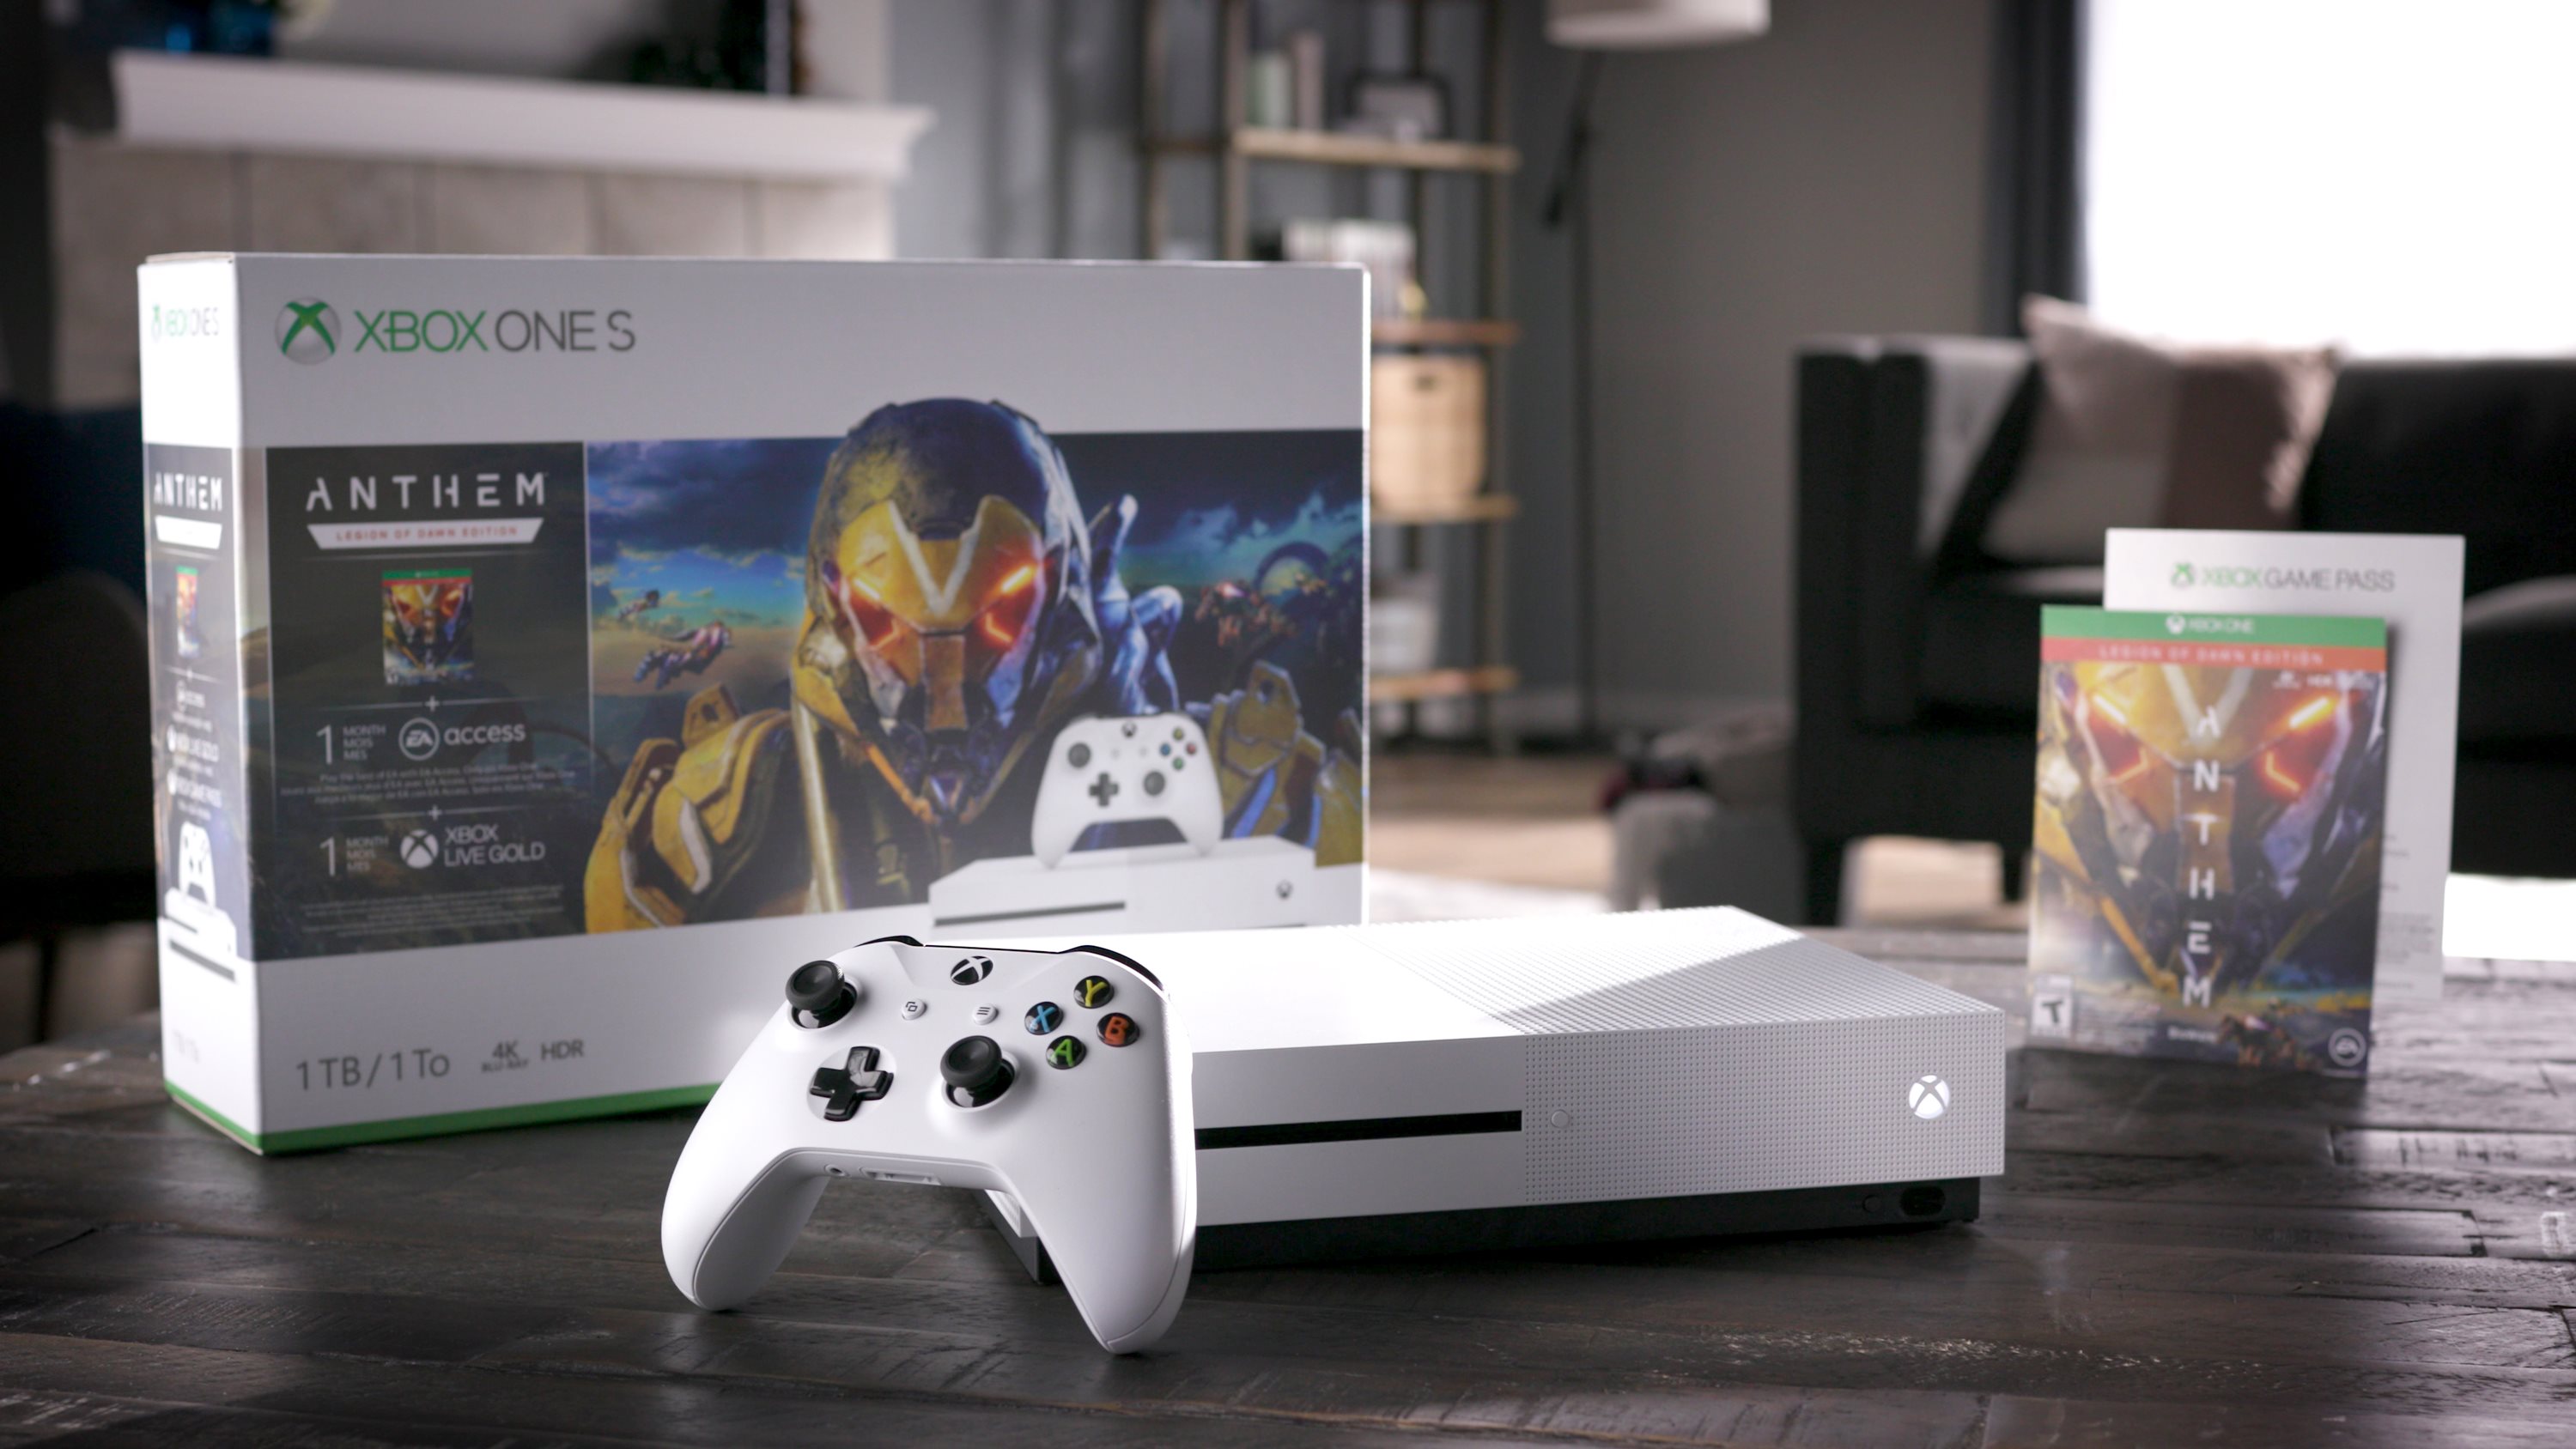 agentschap vier keer partner Microsoft Xbox One S 1TB Anthem Bundle, White, 234-00938 - Walmart.com